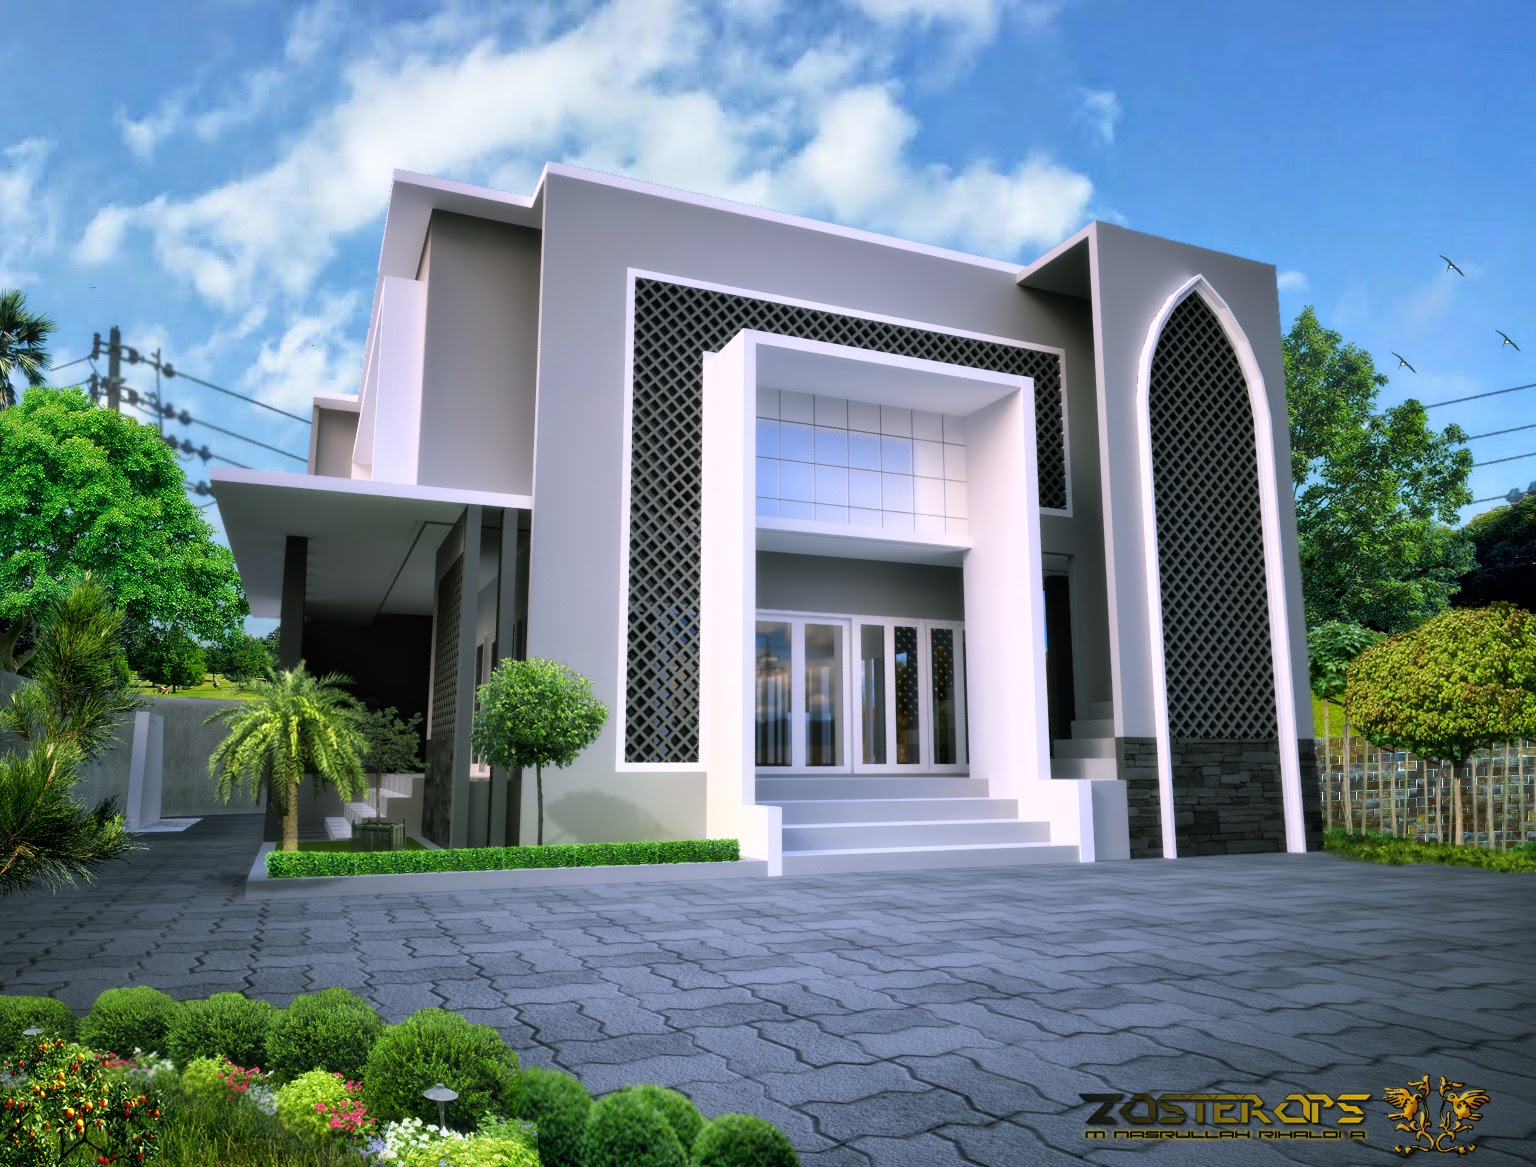 Rencana masjid minimalis (di SMAN 8 Cirebon)  DESAIN RUMAH MINIMALIS 